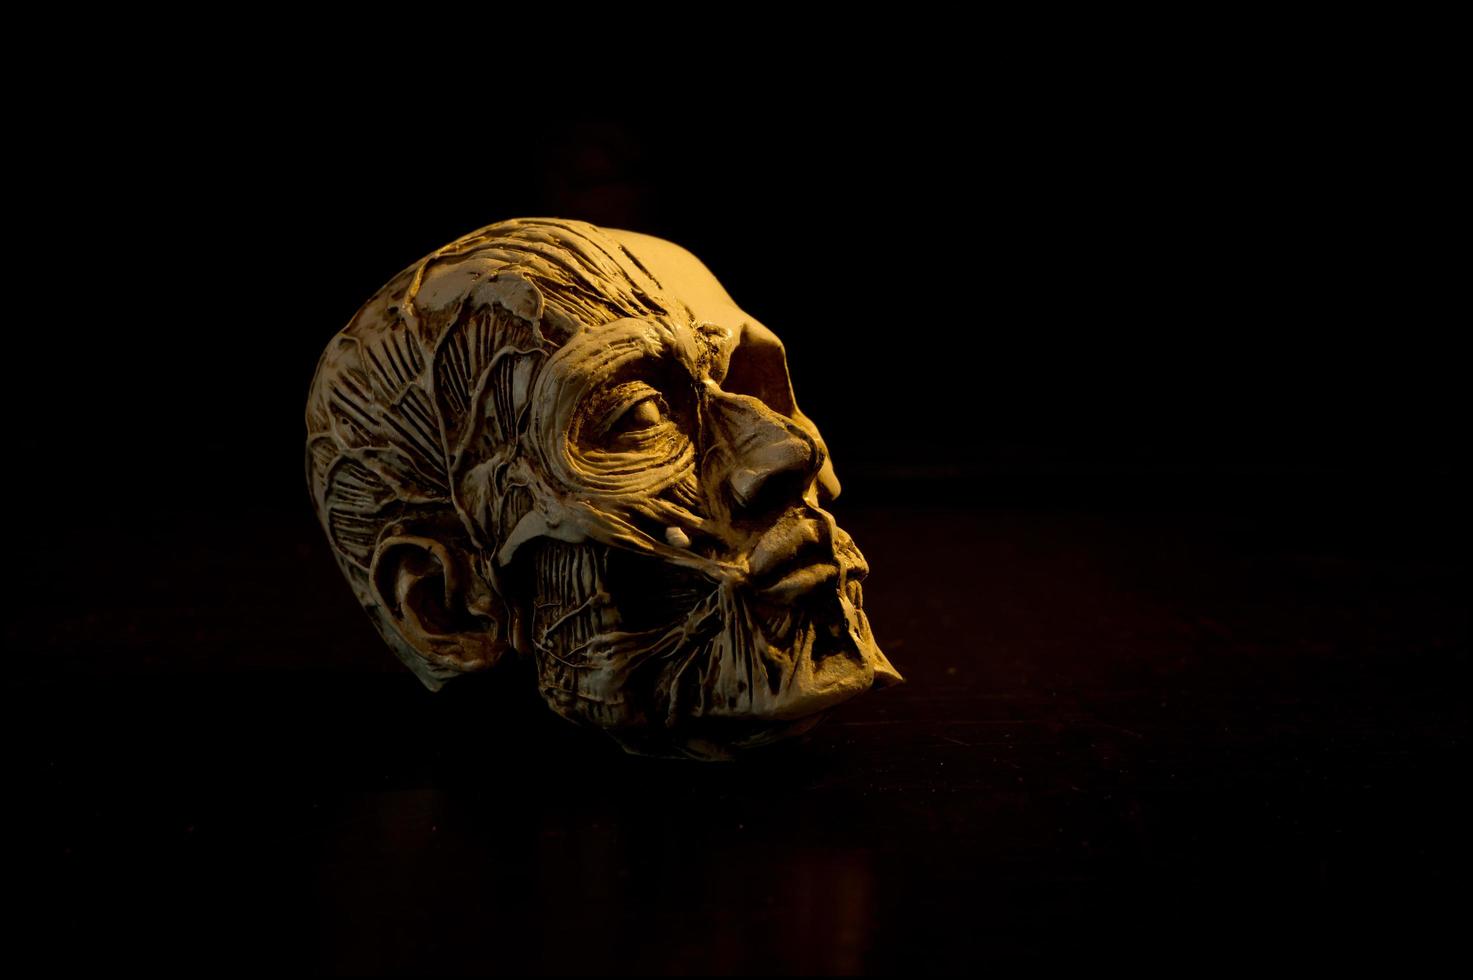 Still life art of a human skull on a black background photo